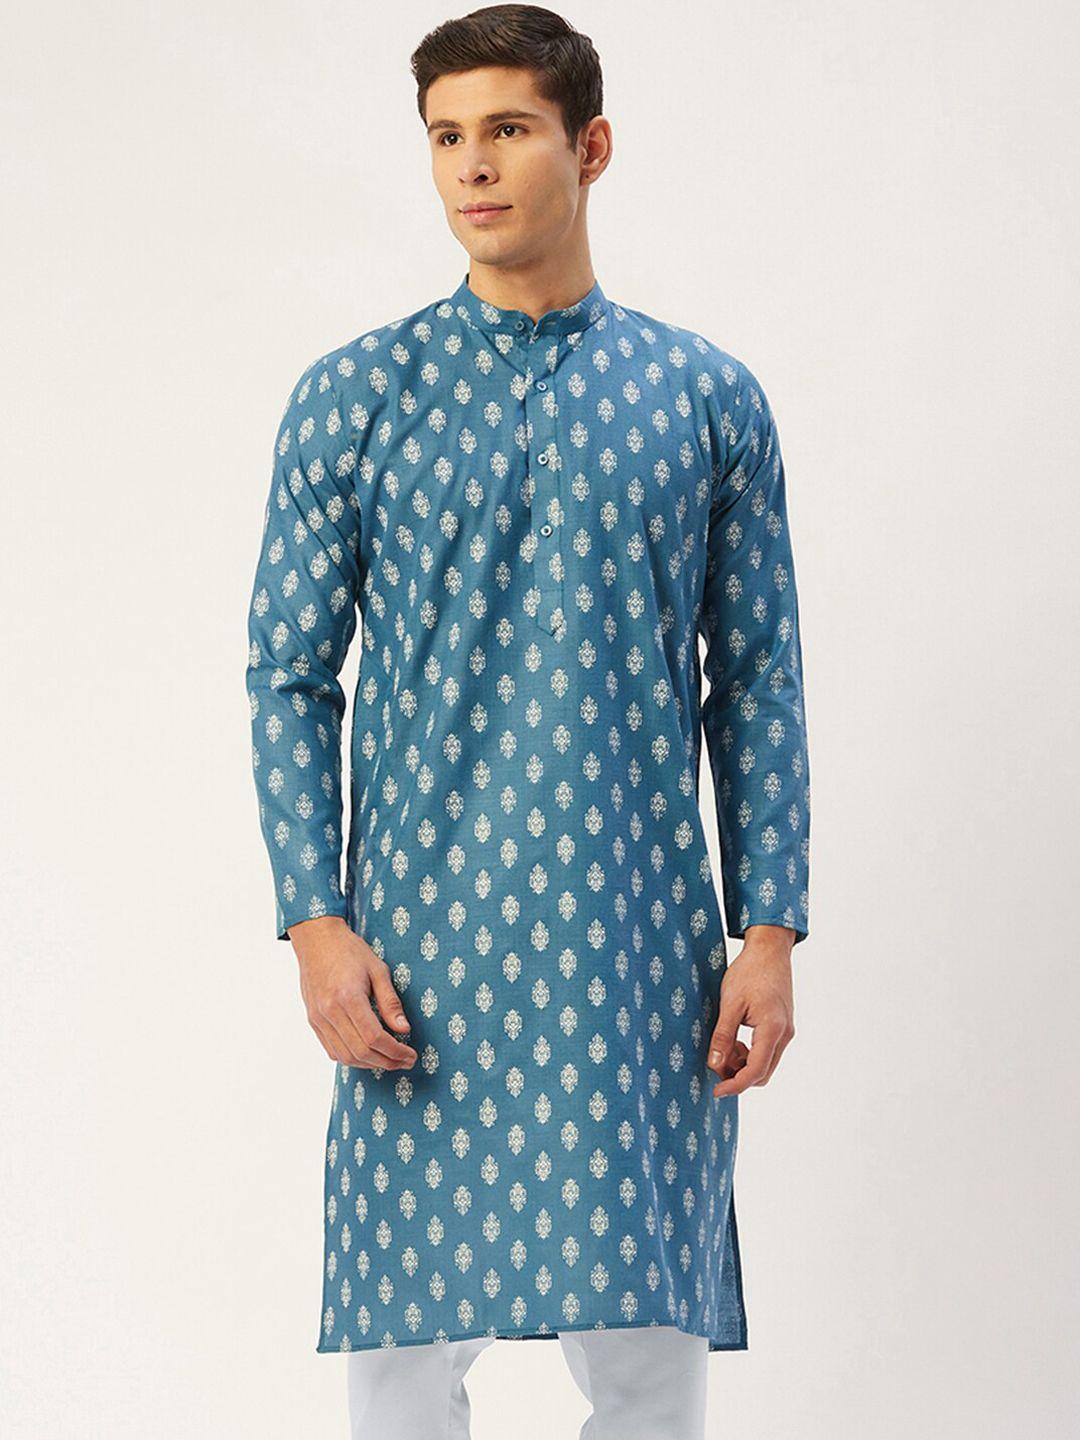 jompers men teal & white ethnic motifs thread work kurta